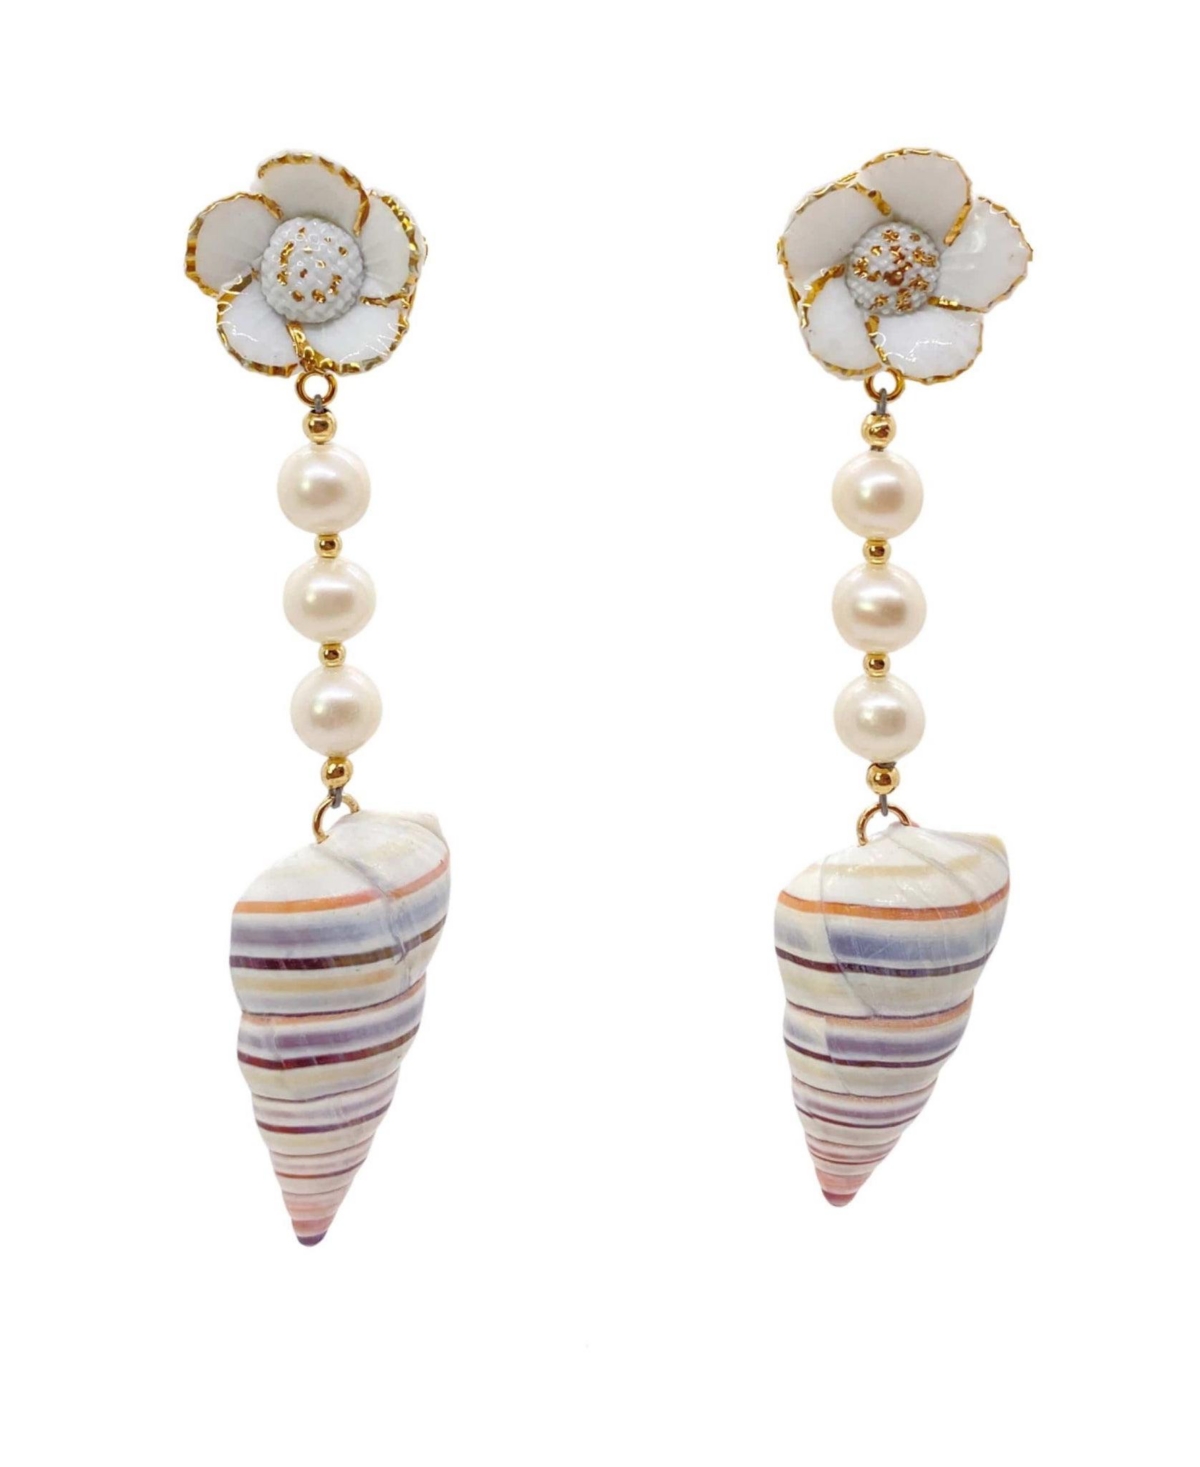 ili Kai Earrings - White, paster pink, lavender  gold